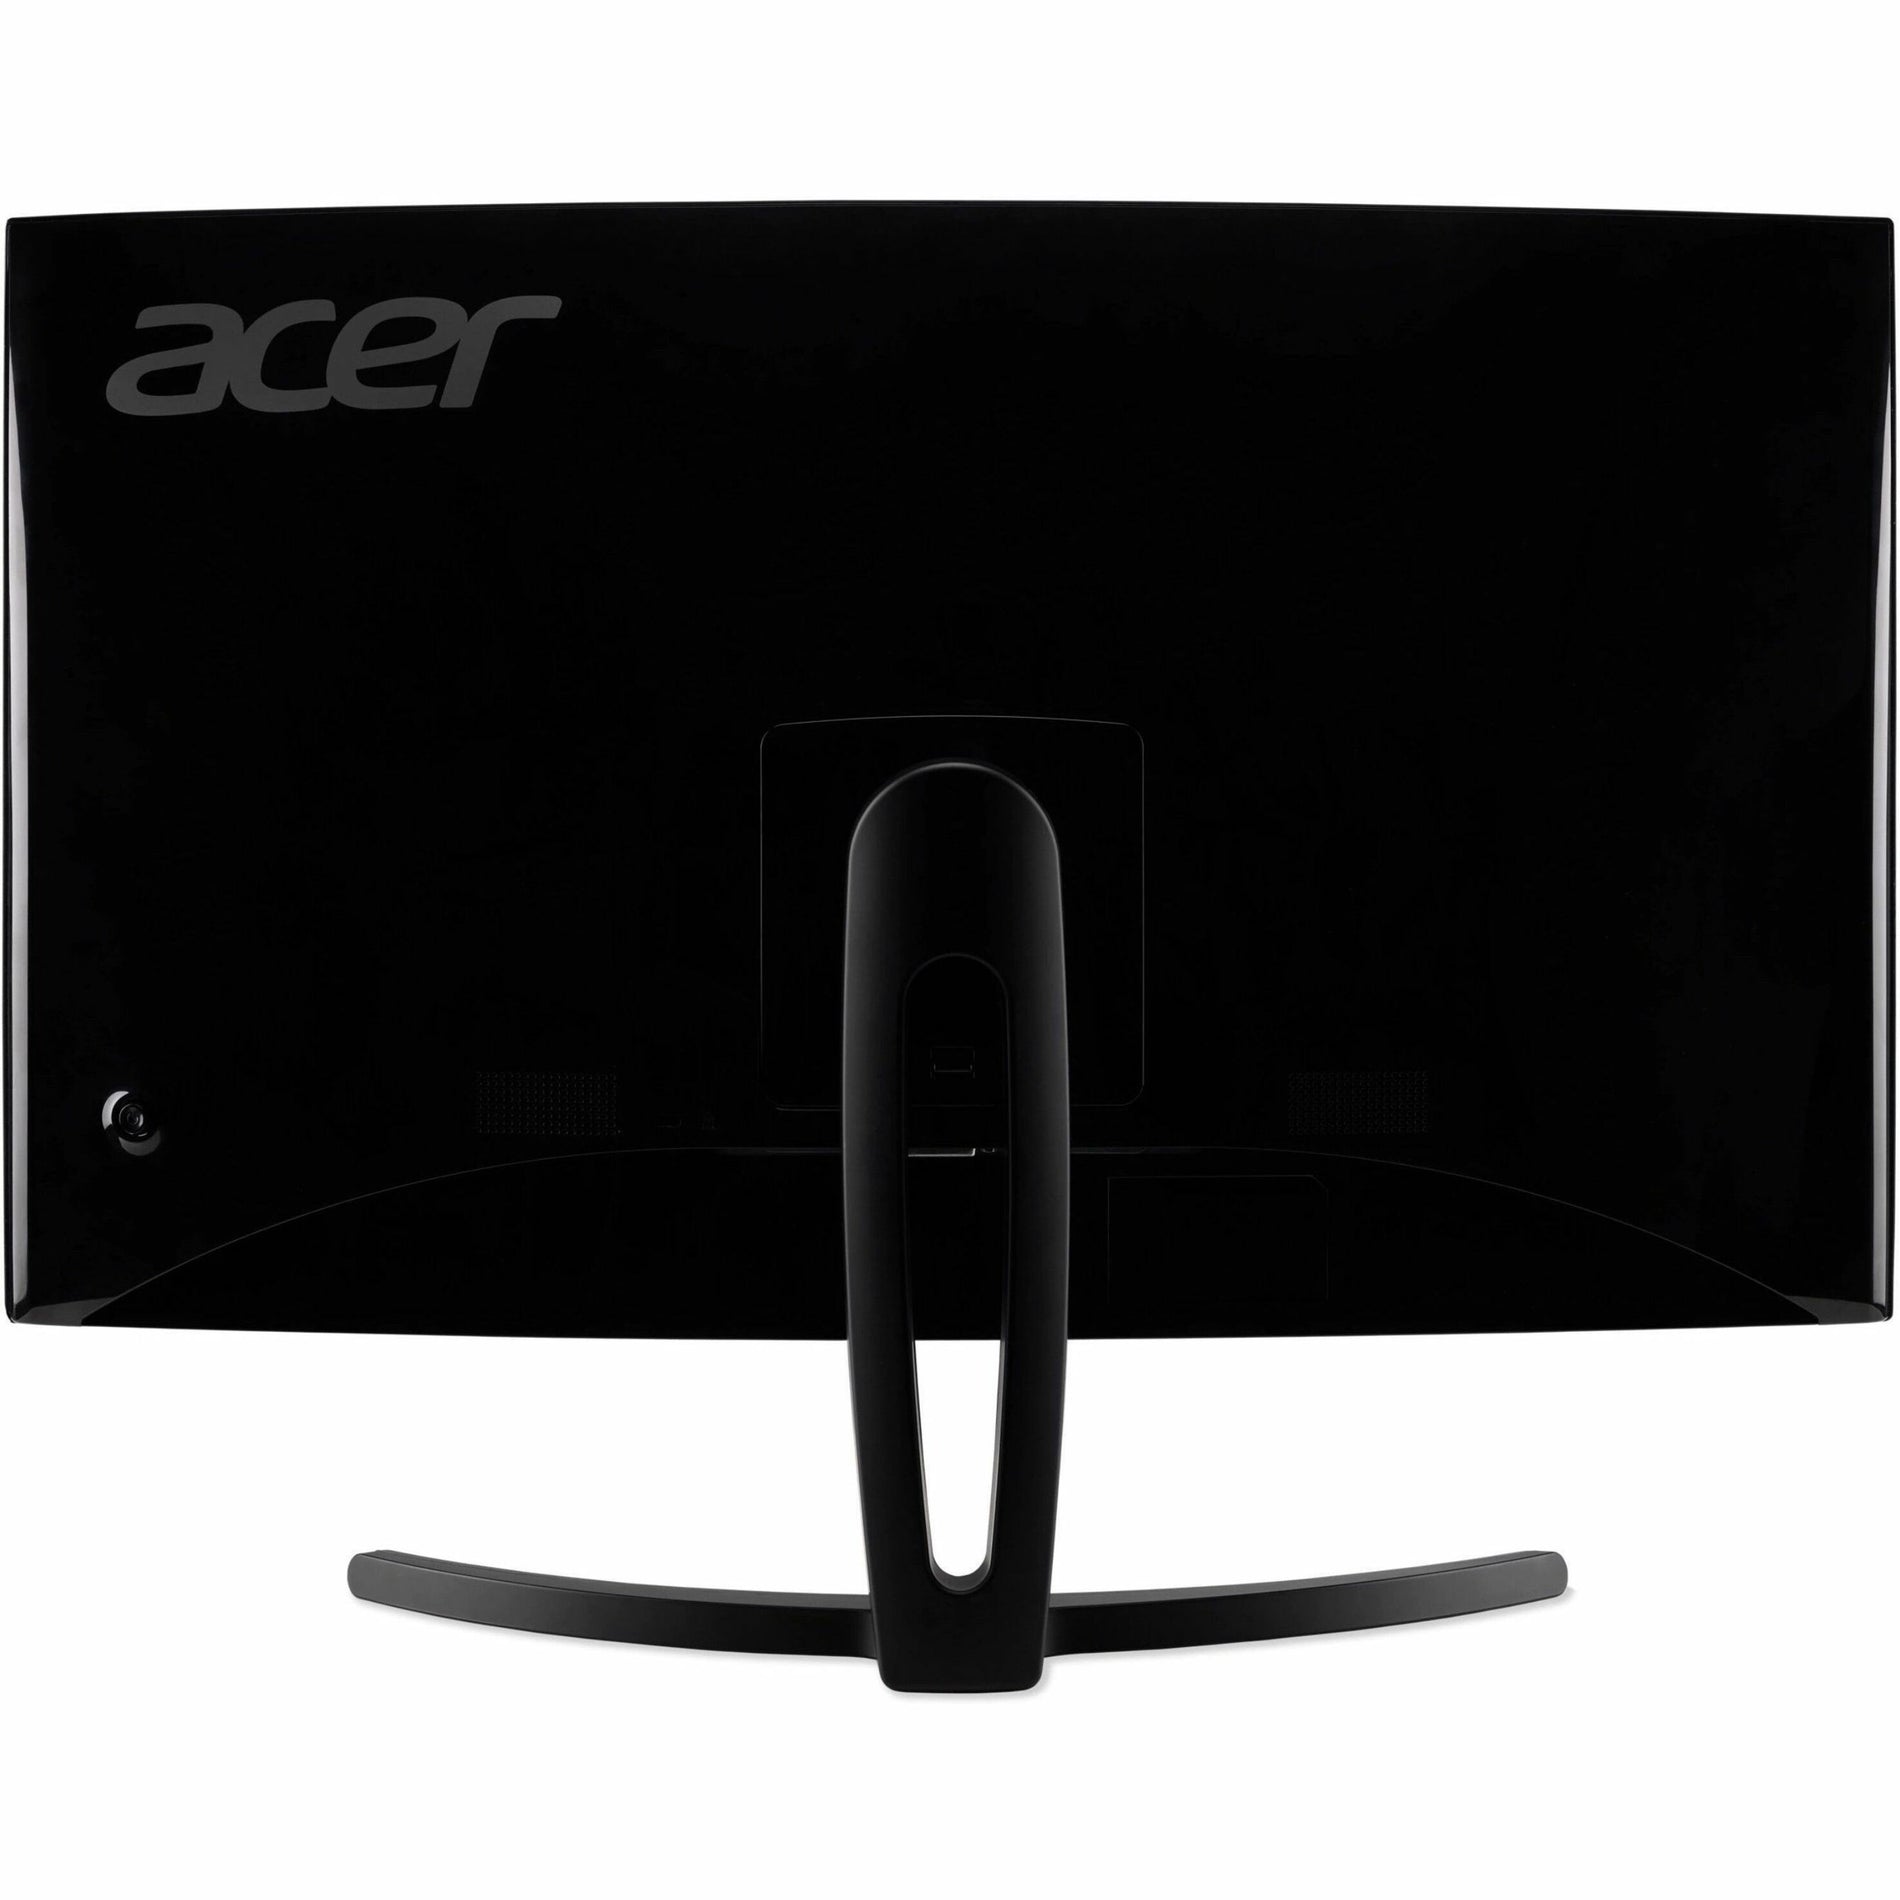 Acer UM.HE3AA.B01 ED273 B 27" LCD Monitor, Full HD, 1ms Response Time, HDMI & VGA Inputs